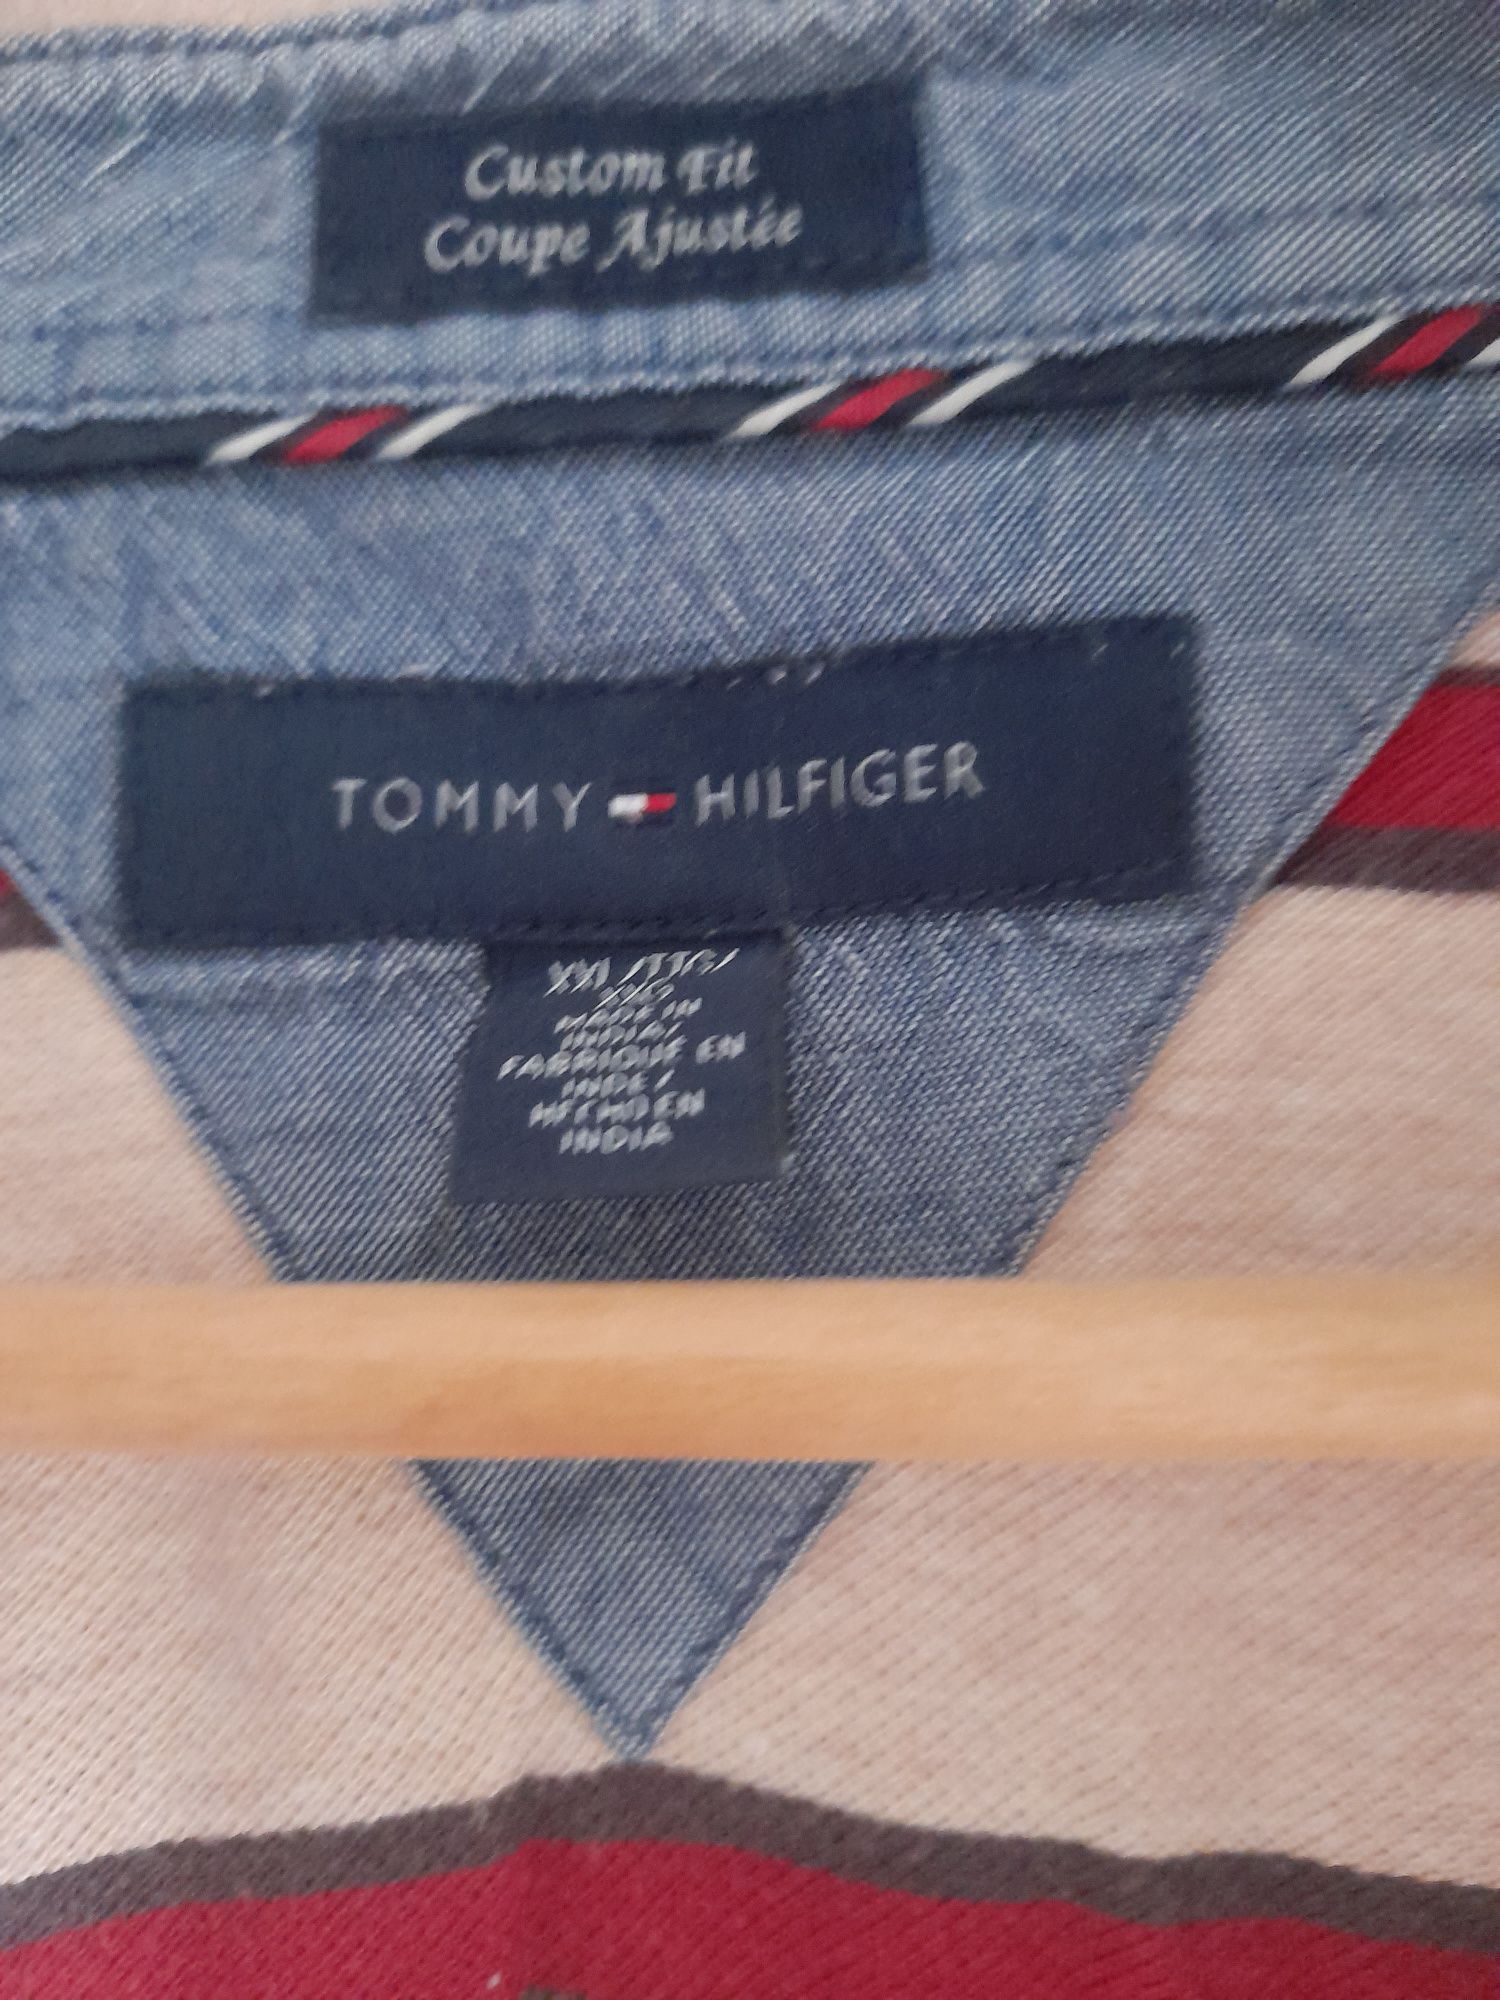 Tommy Hilfiger original, tricou barbati XXL, purtat dar în state bună.